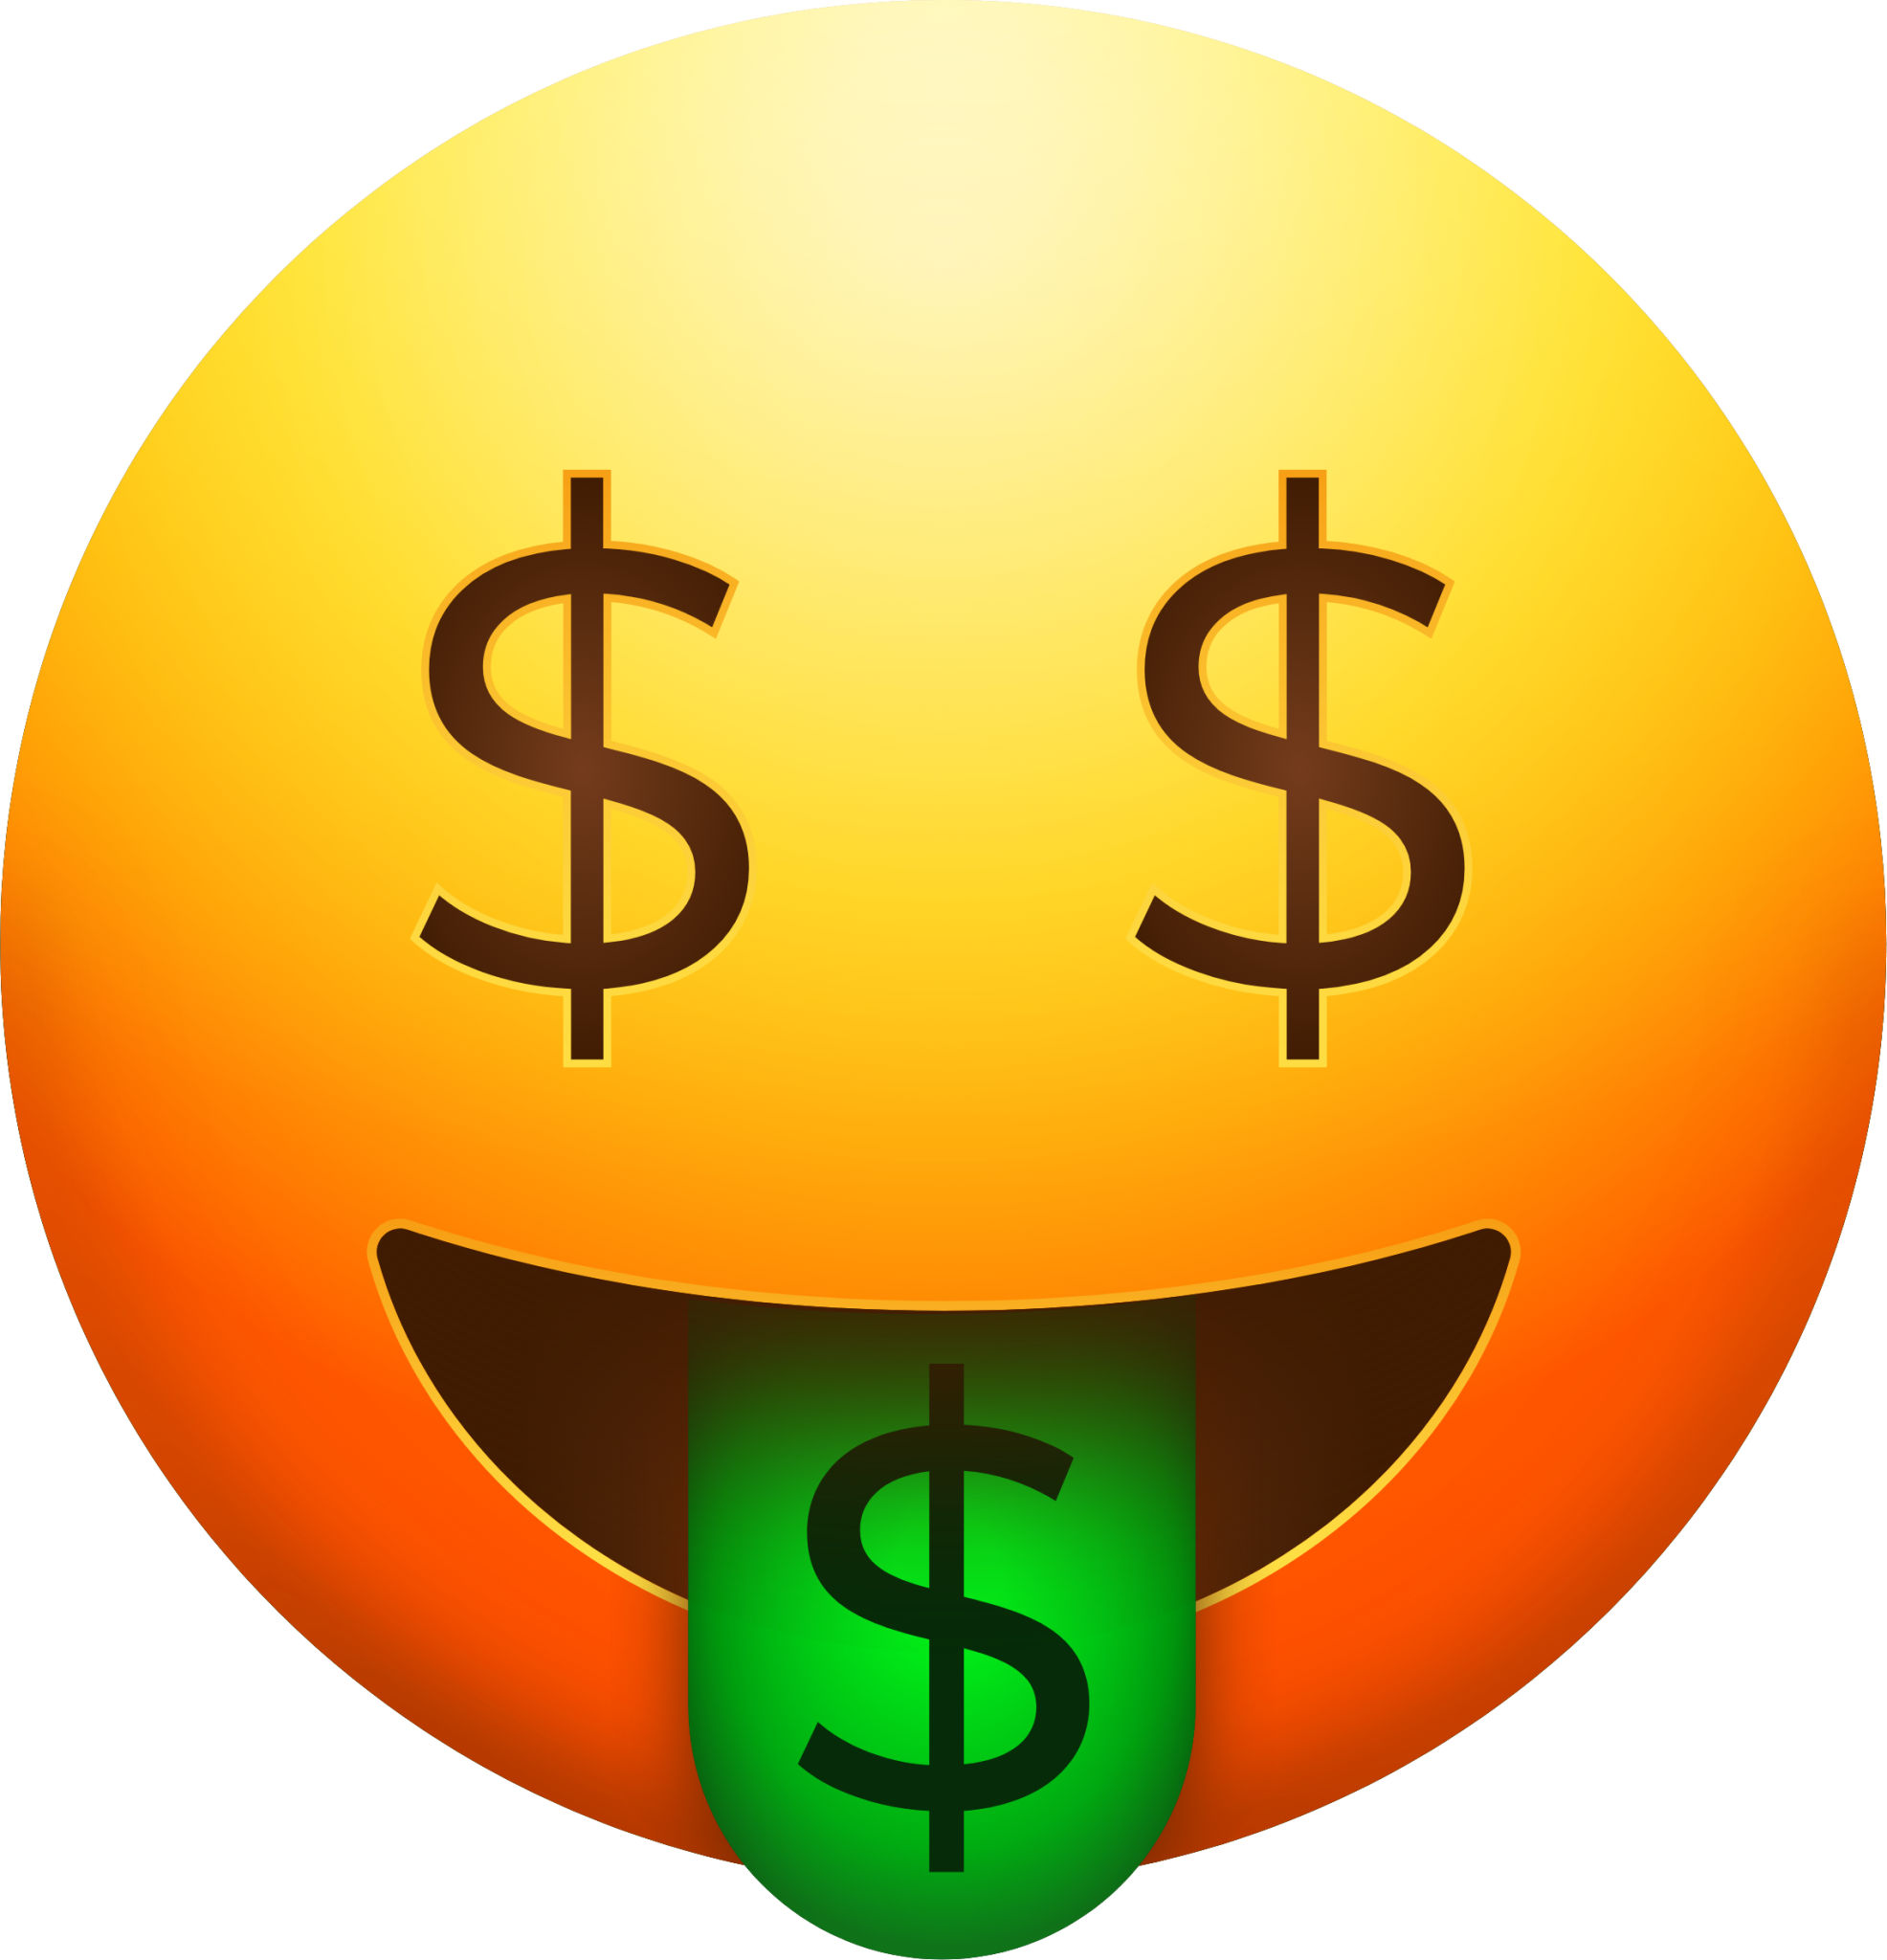 star and money emoji